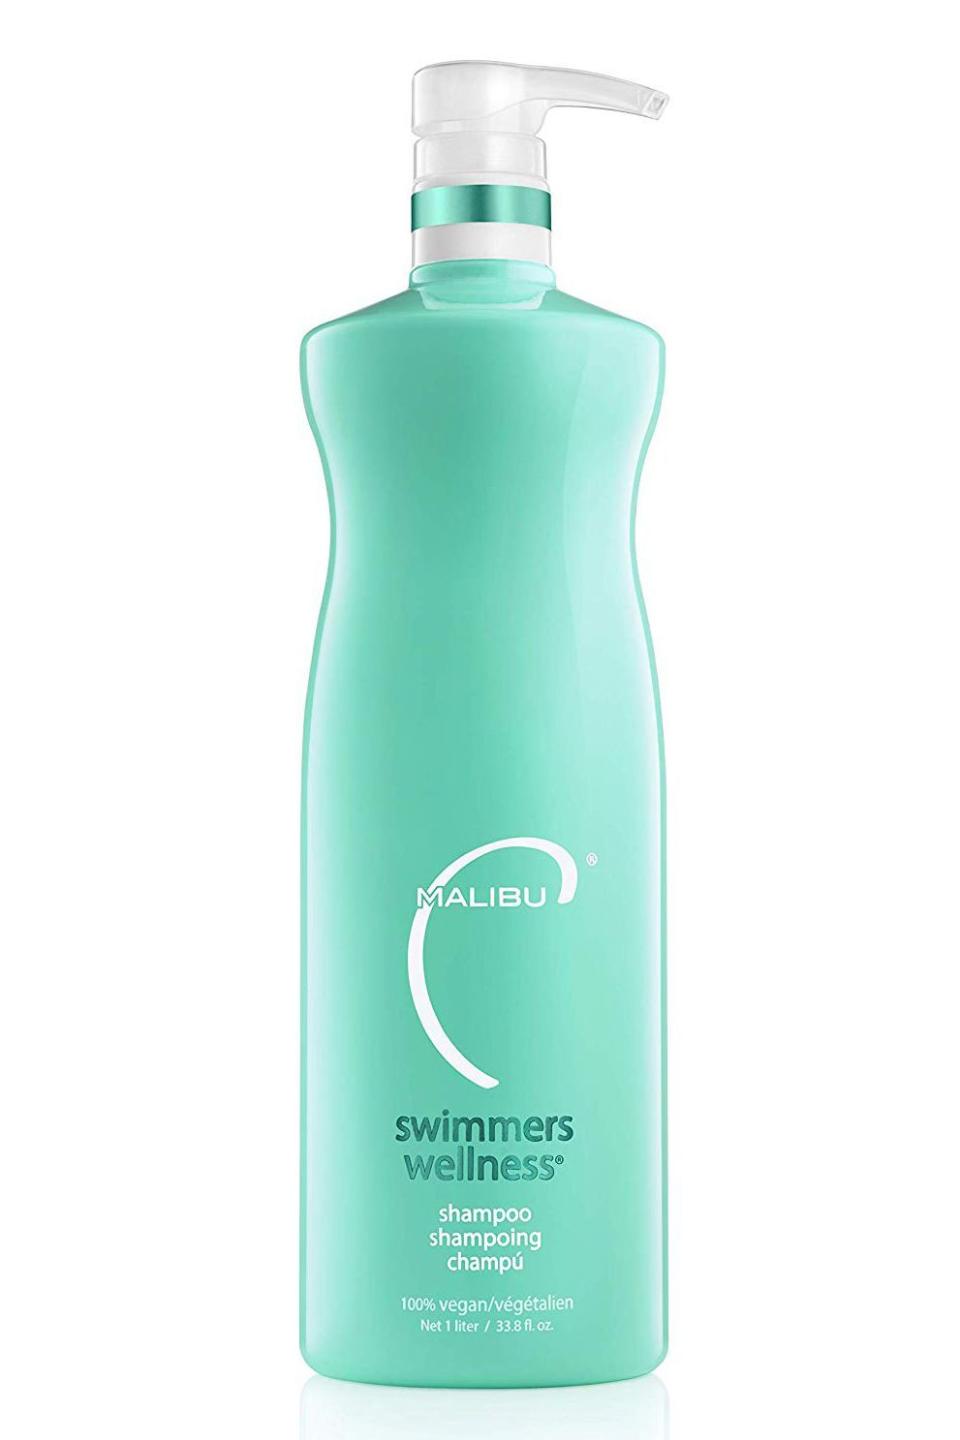 1) Swimmers Wellness Shampoo